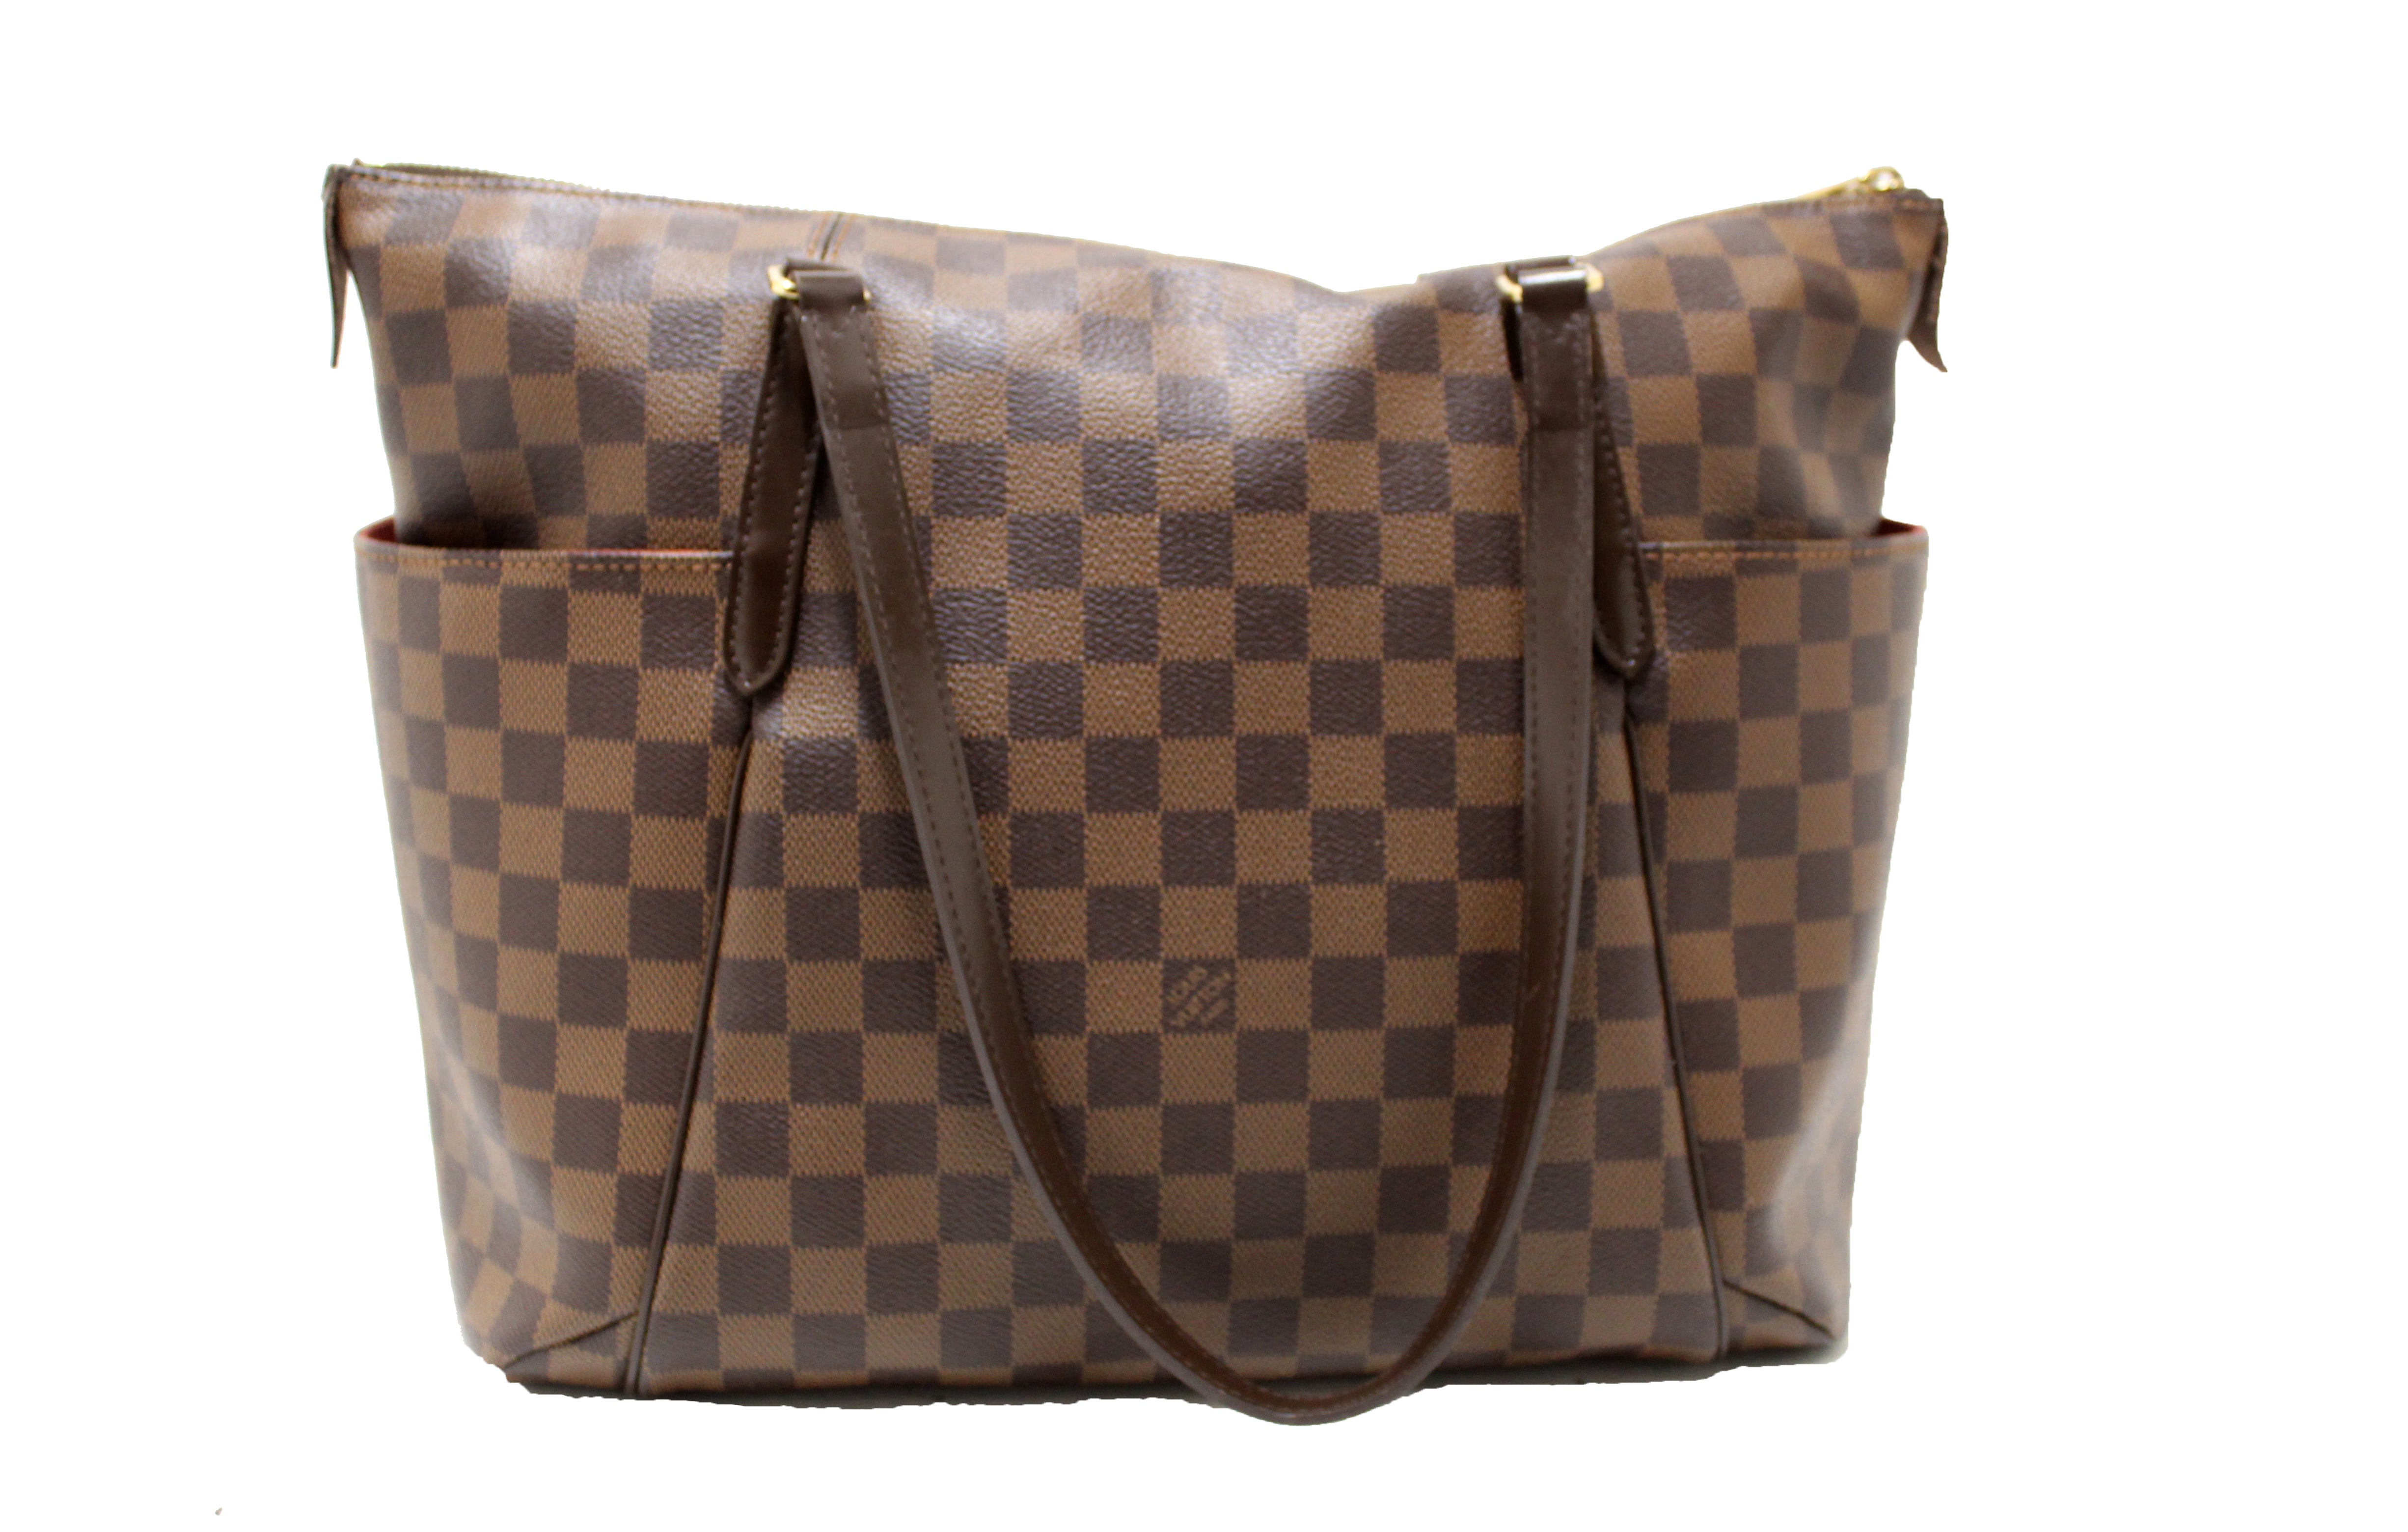 Authentic Louis Vuitton Damier Ebene Canvas Totally MM Tote Shoulder Bag